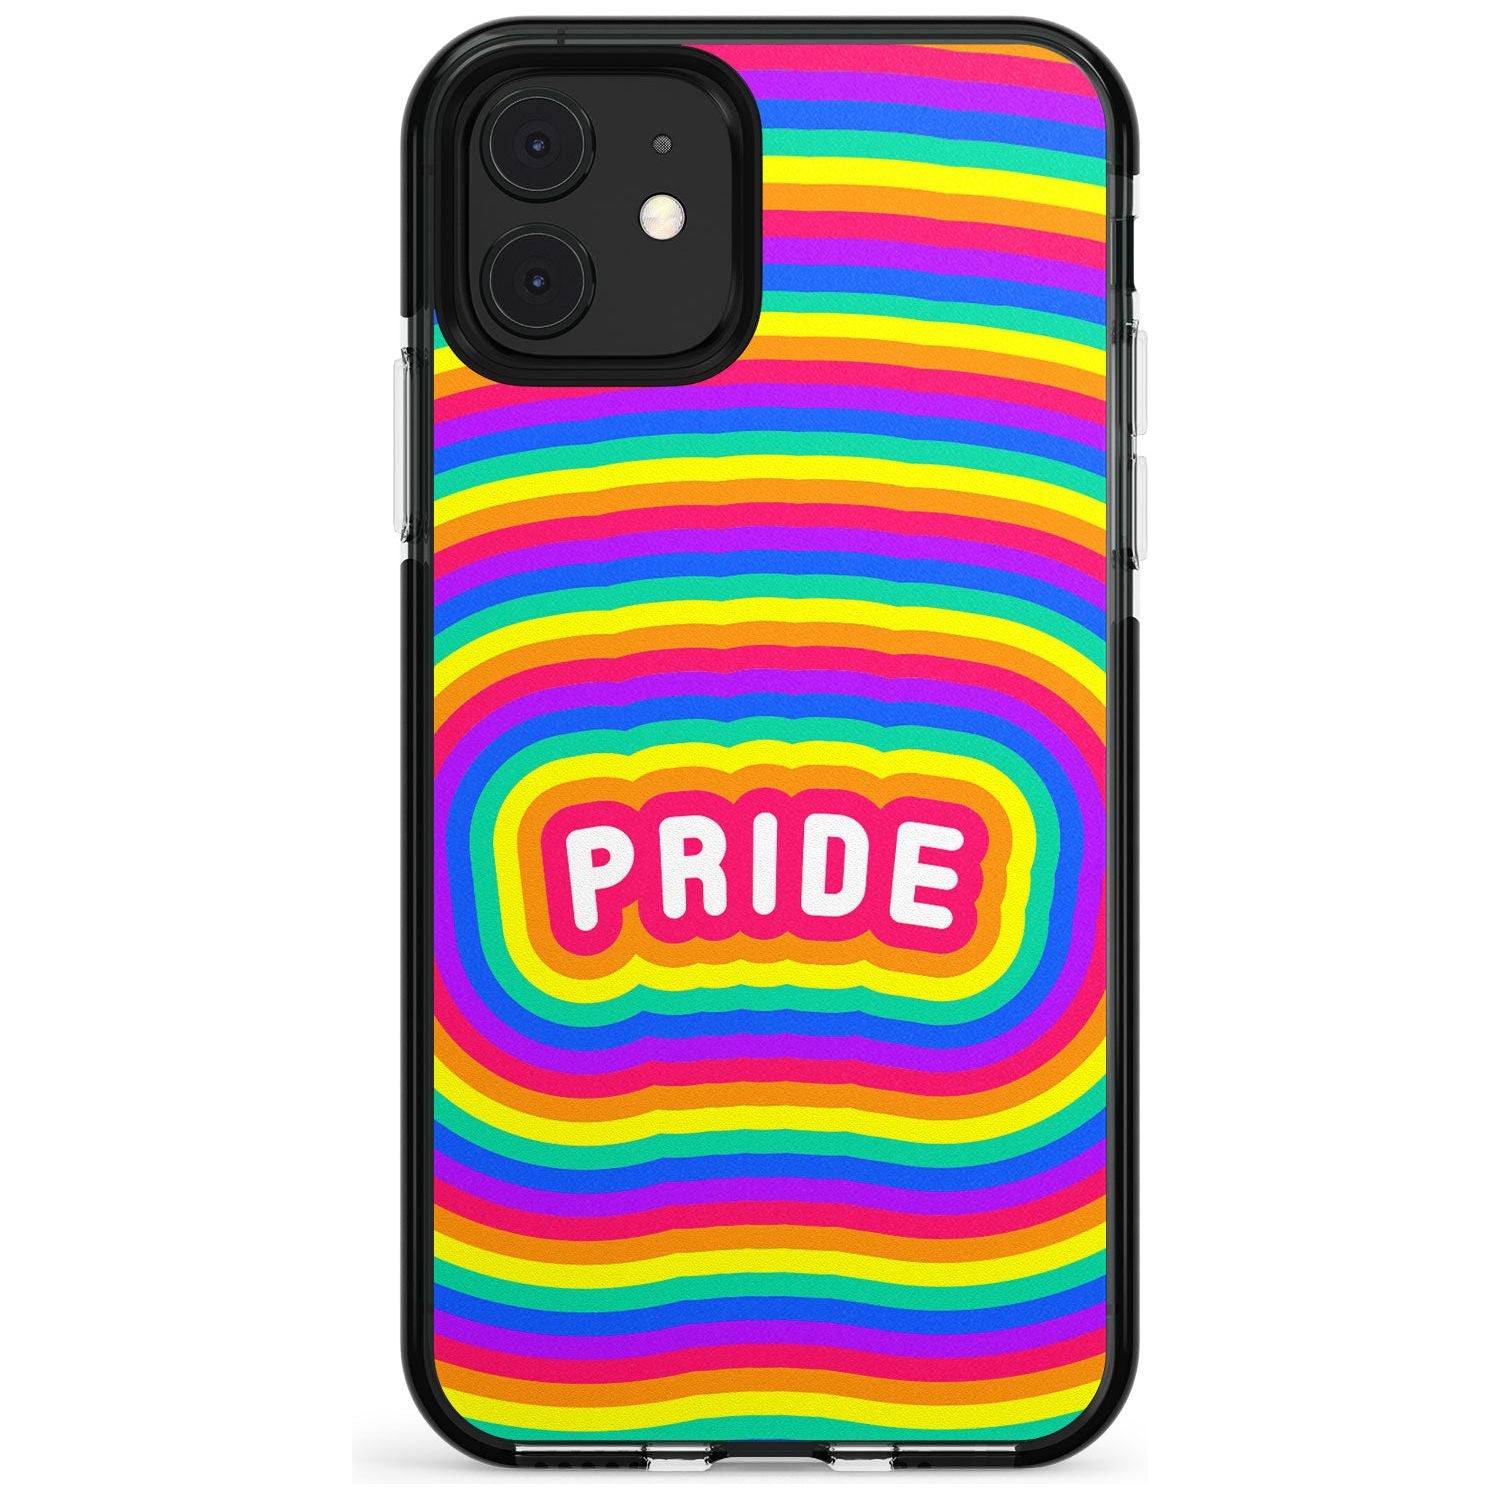 Pride Black Impact Phone Case for iPhone 11 Pro Max